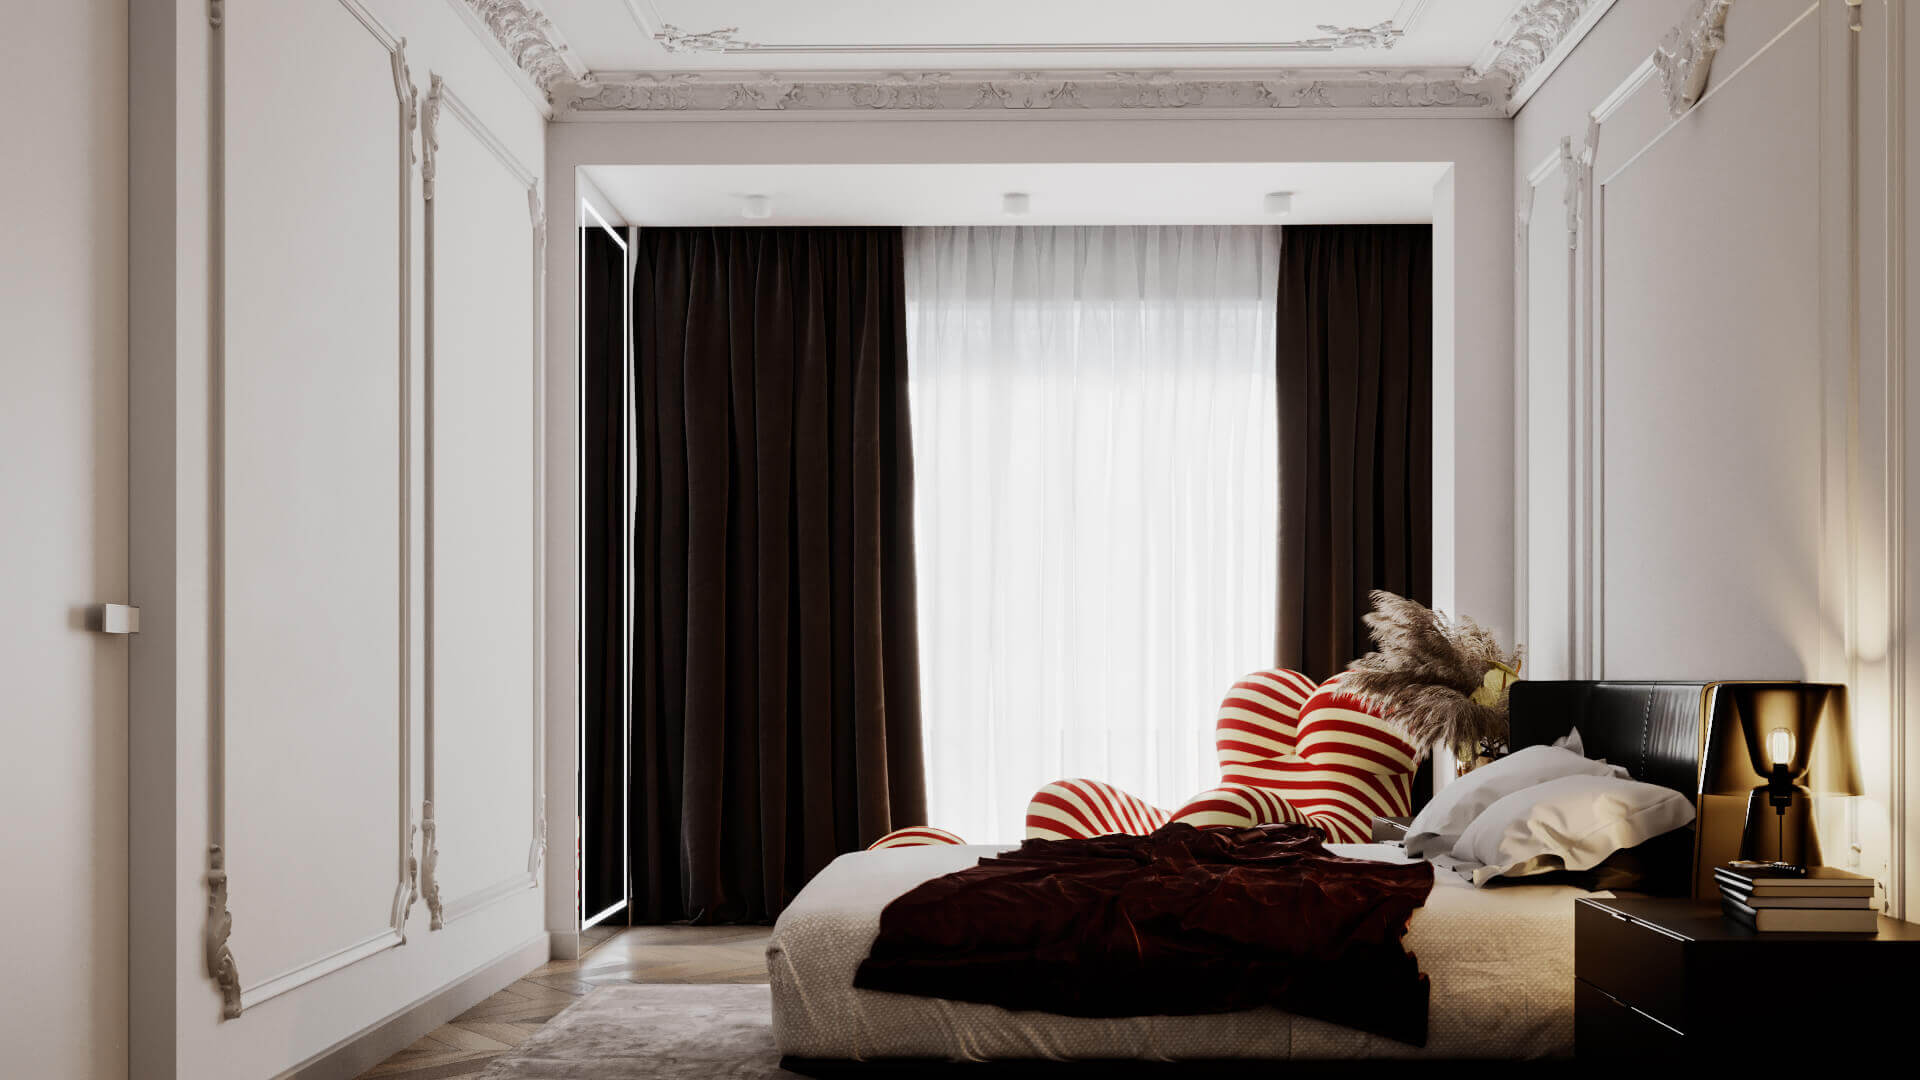 Bernardazzi Apartment bedroom design classic - cgi visualization